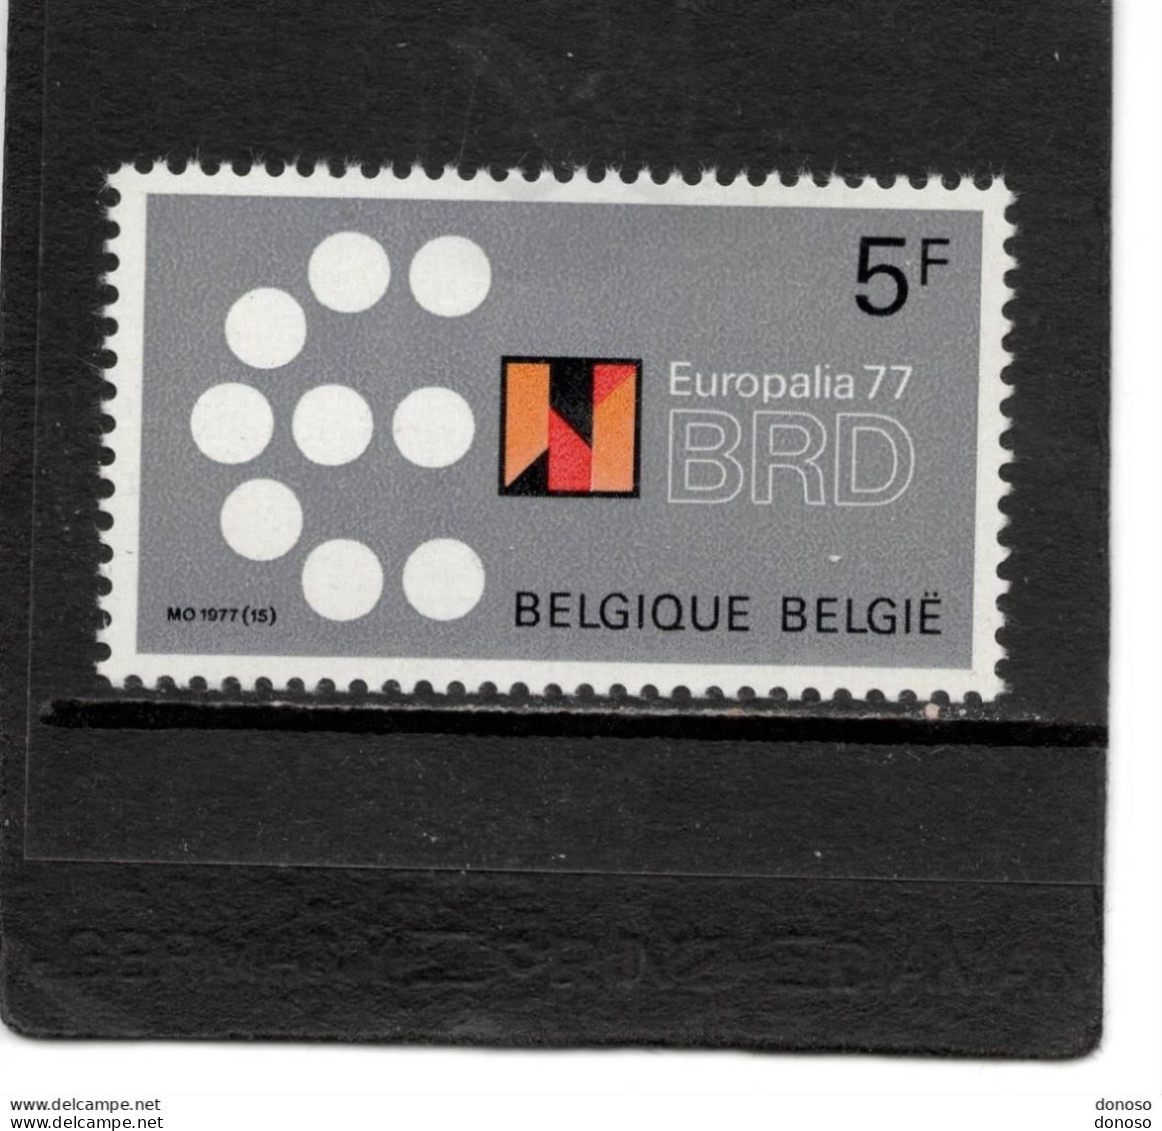 BELGIQUE 1977 EUROPALIA BRD Yvert 1862 NEUF** MNH - Unused Stamps